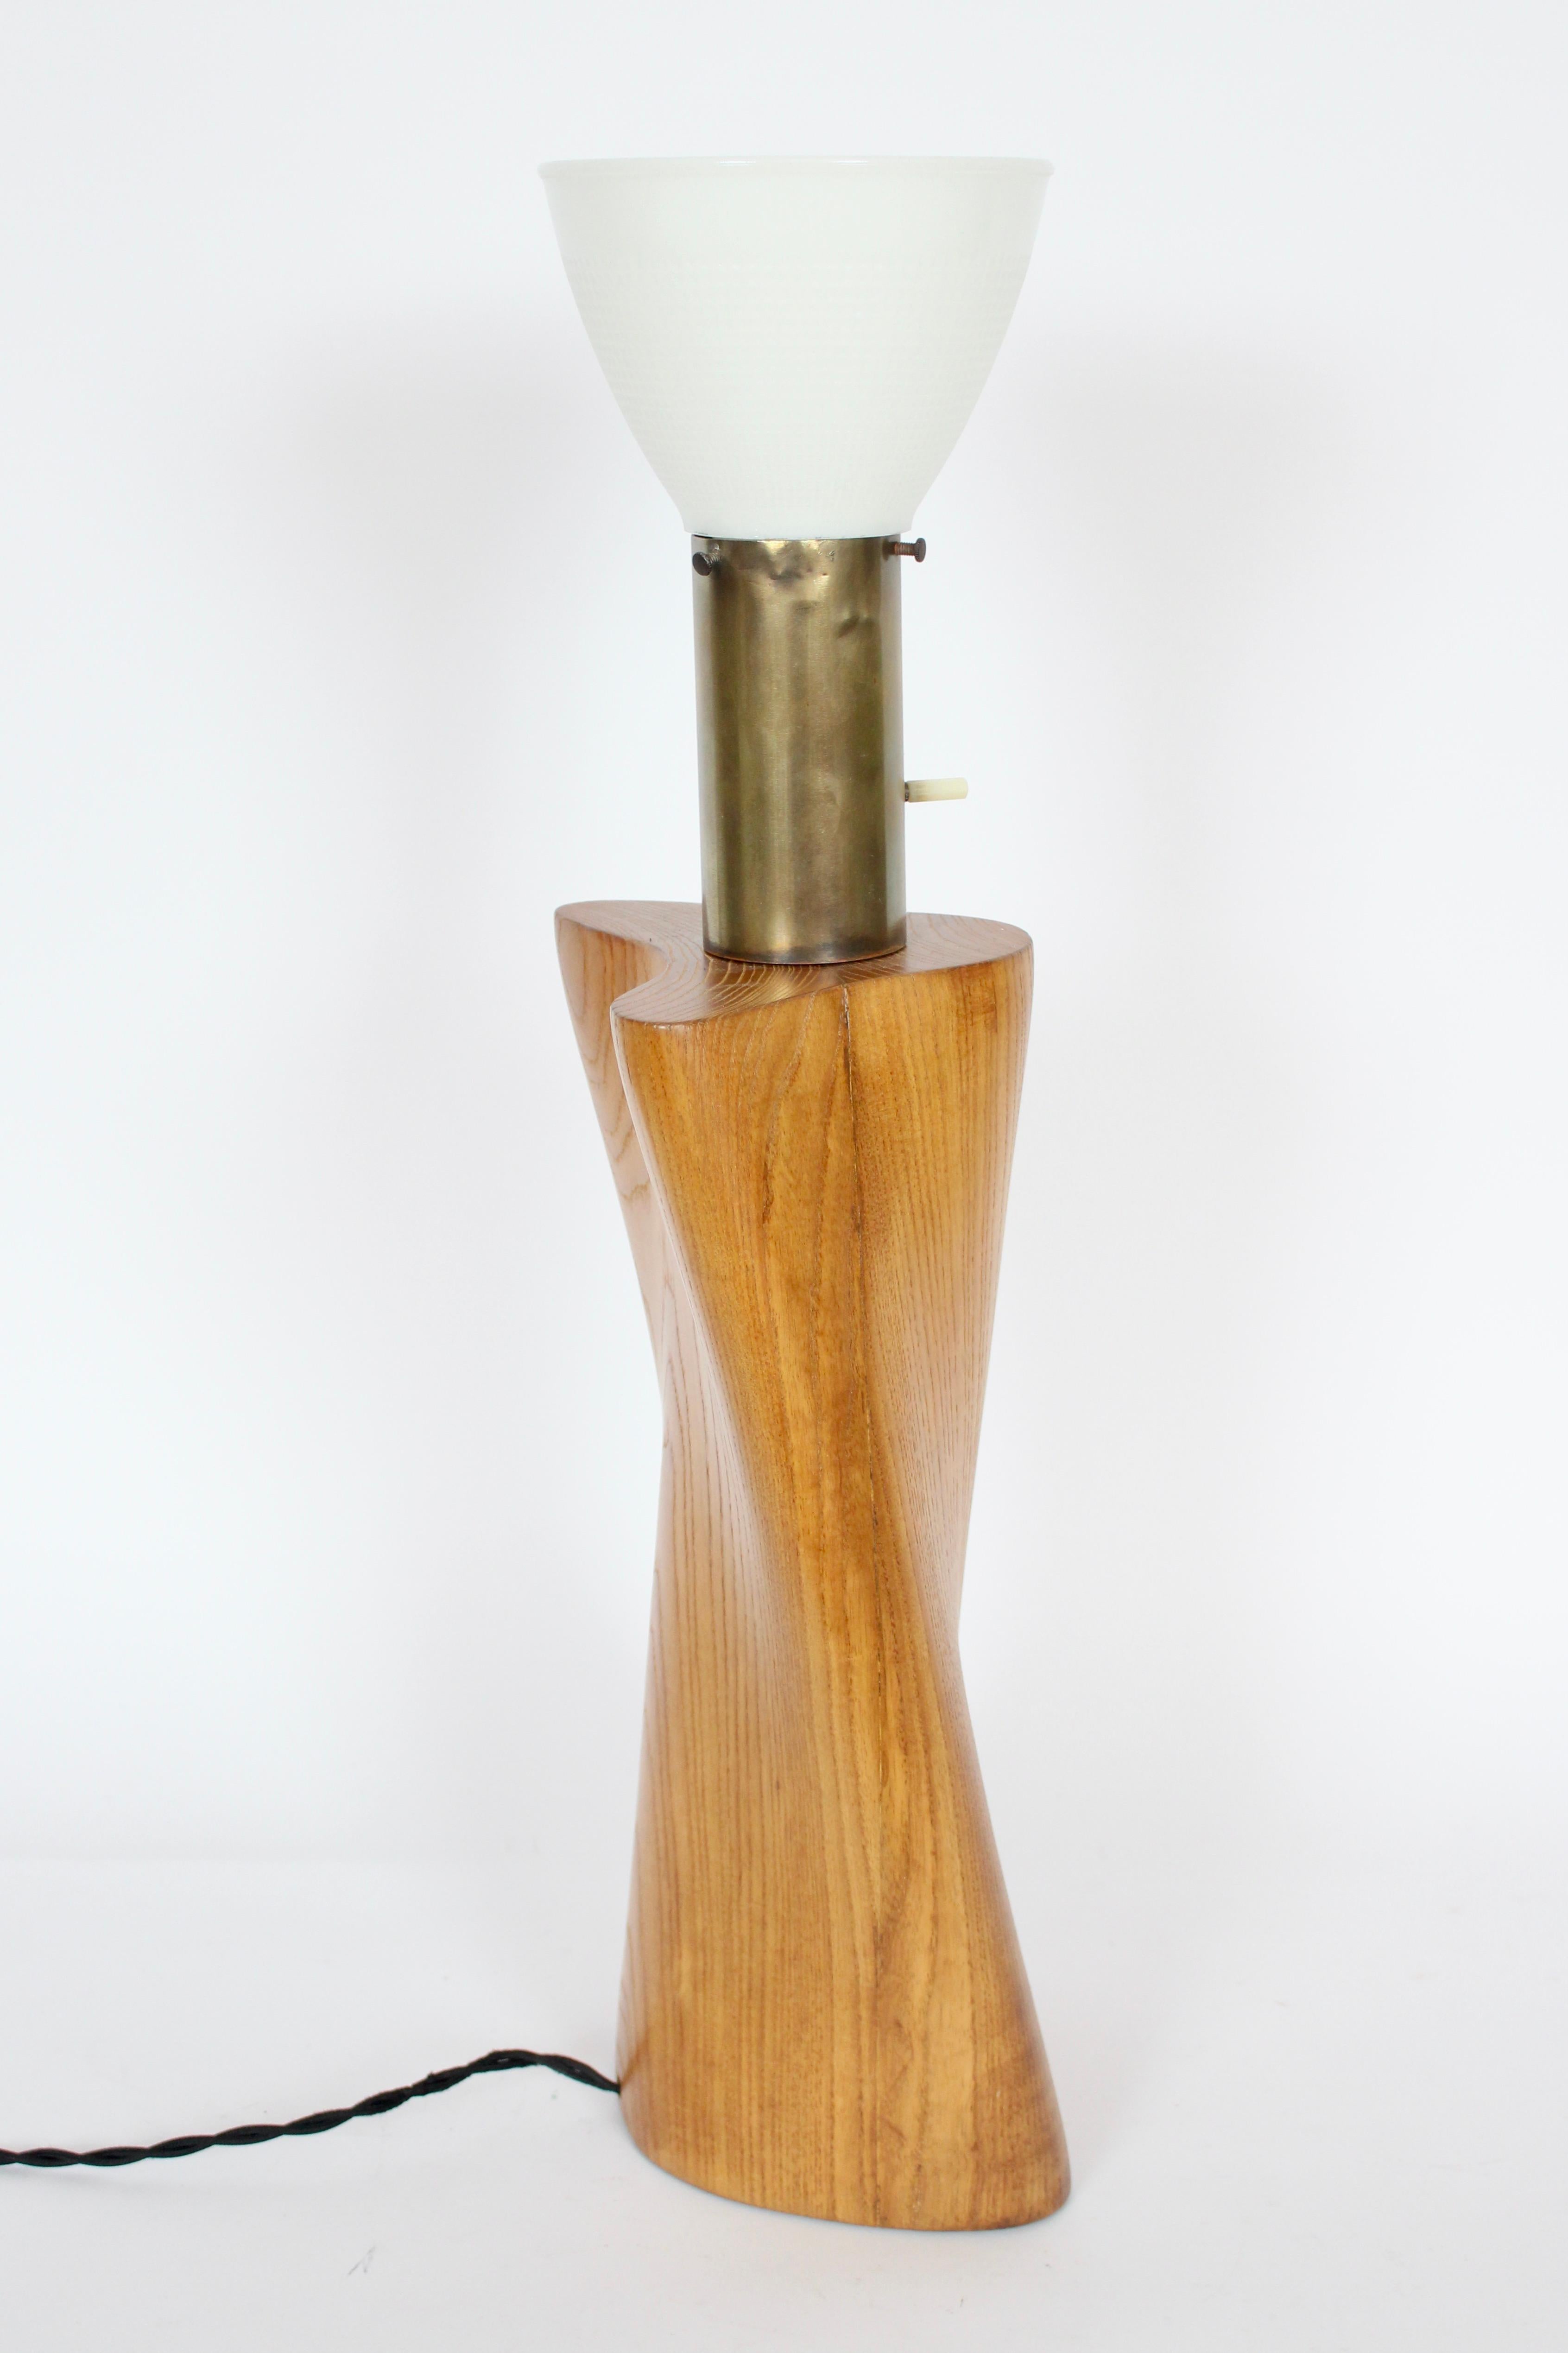 Yasha Heifetz Biomorphic Ash Table Lamp with Milk Glass Shade, 1940s For Sale 1